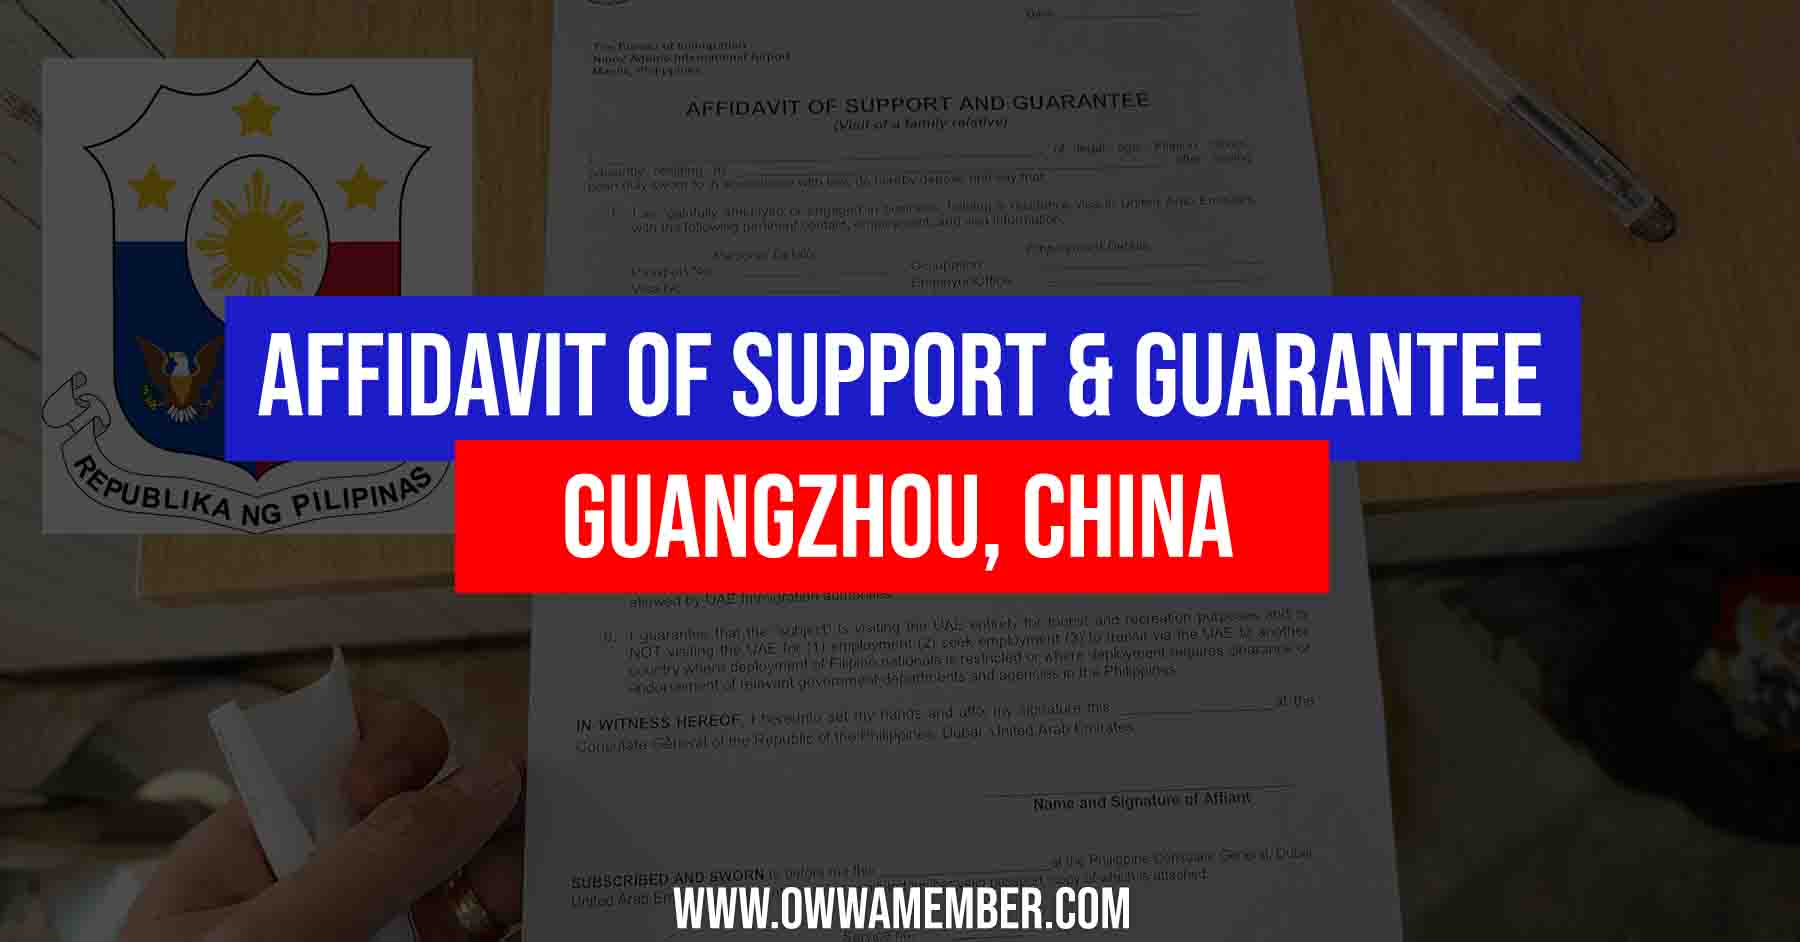 affidavit of support and guarantee guangzhou china philippine consulate